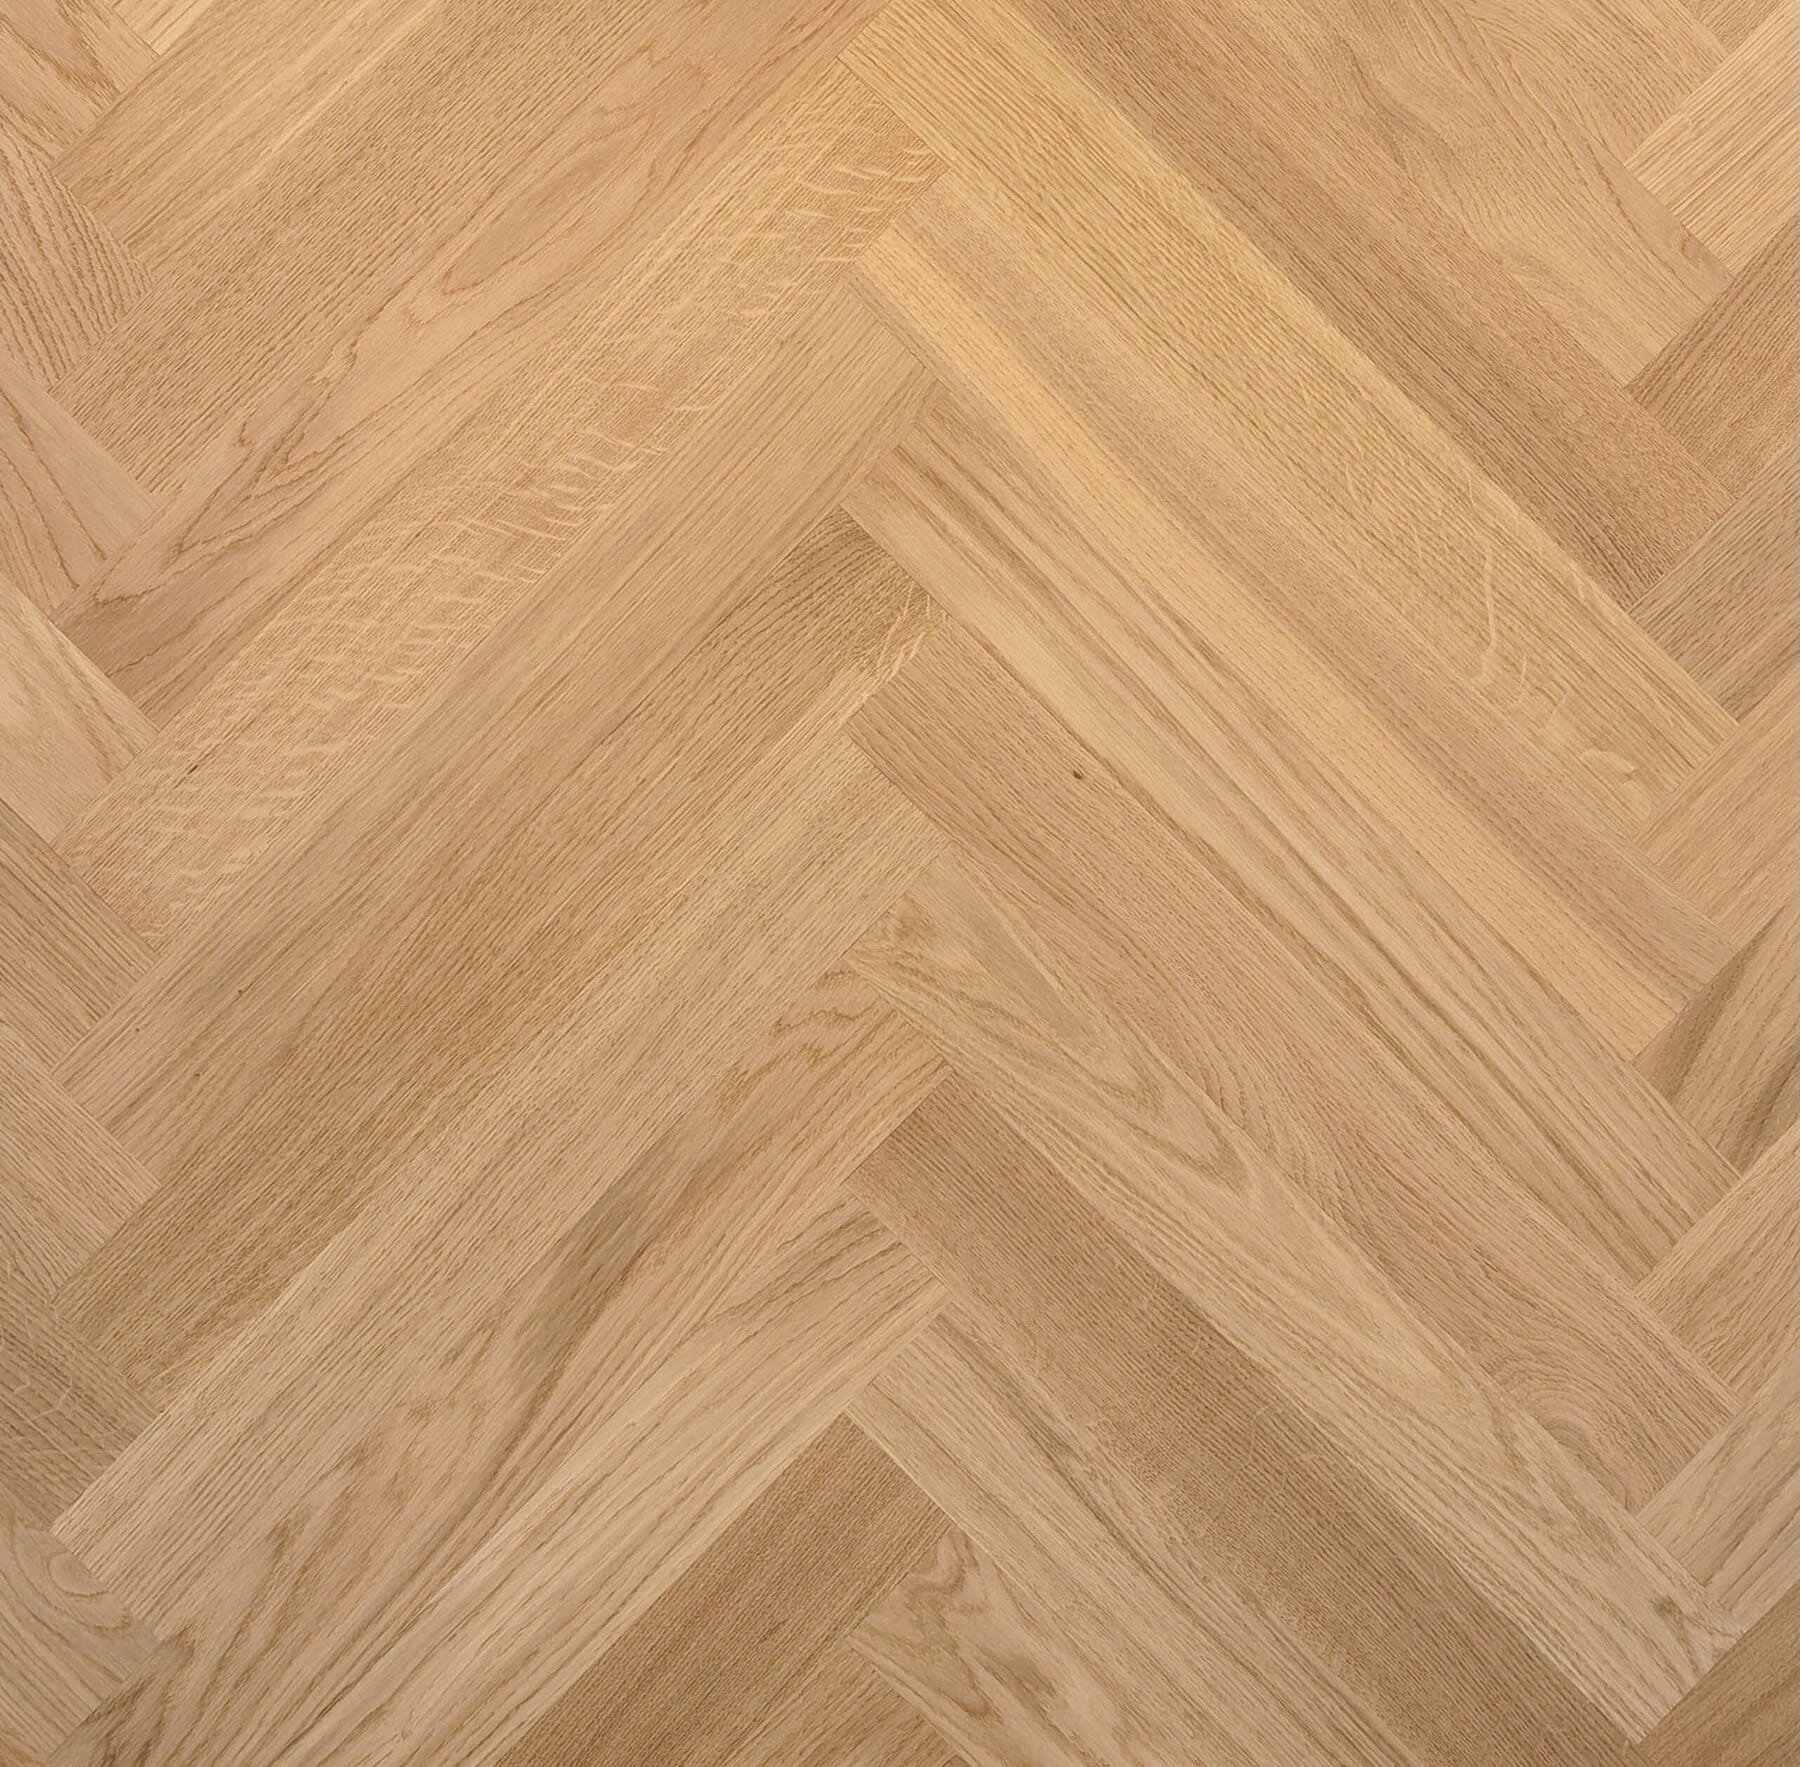 Engineered parquet wood flooring herringbone select oak finished with UV oil in Surrey